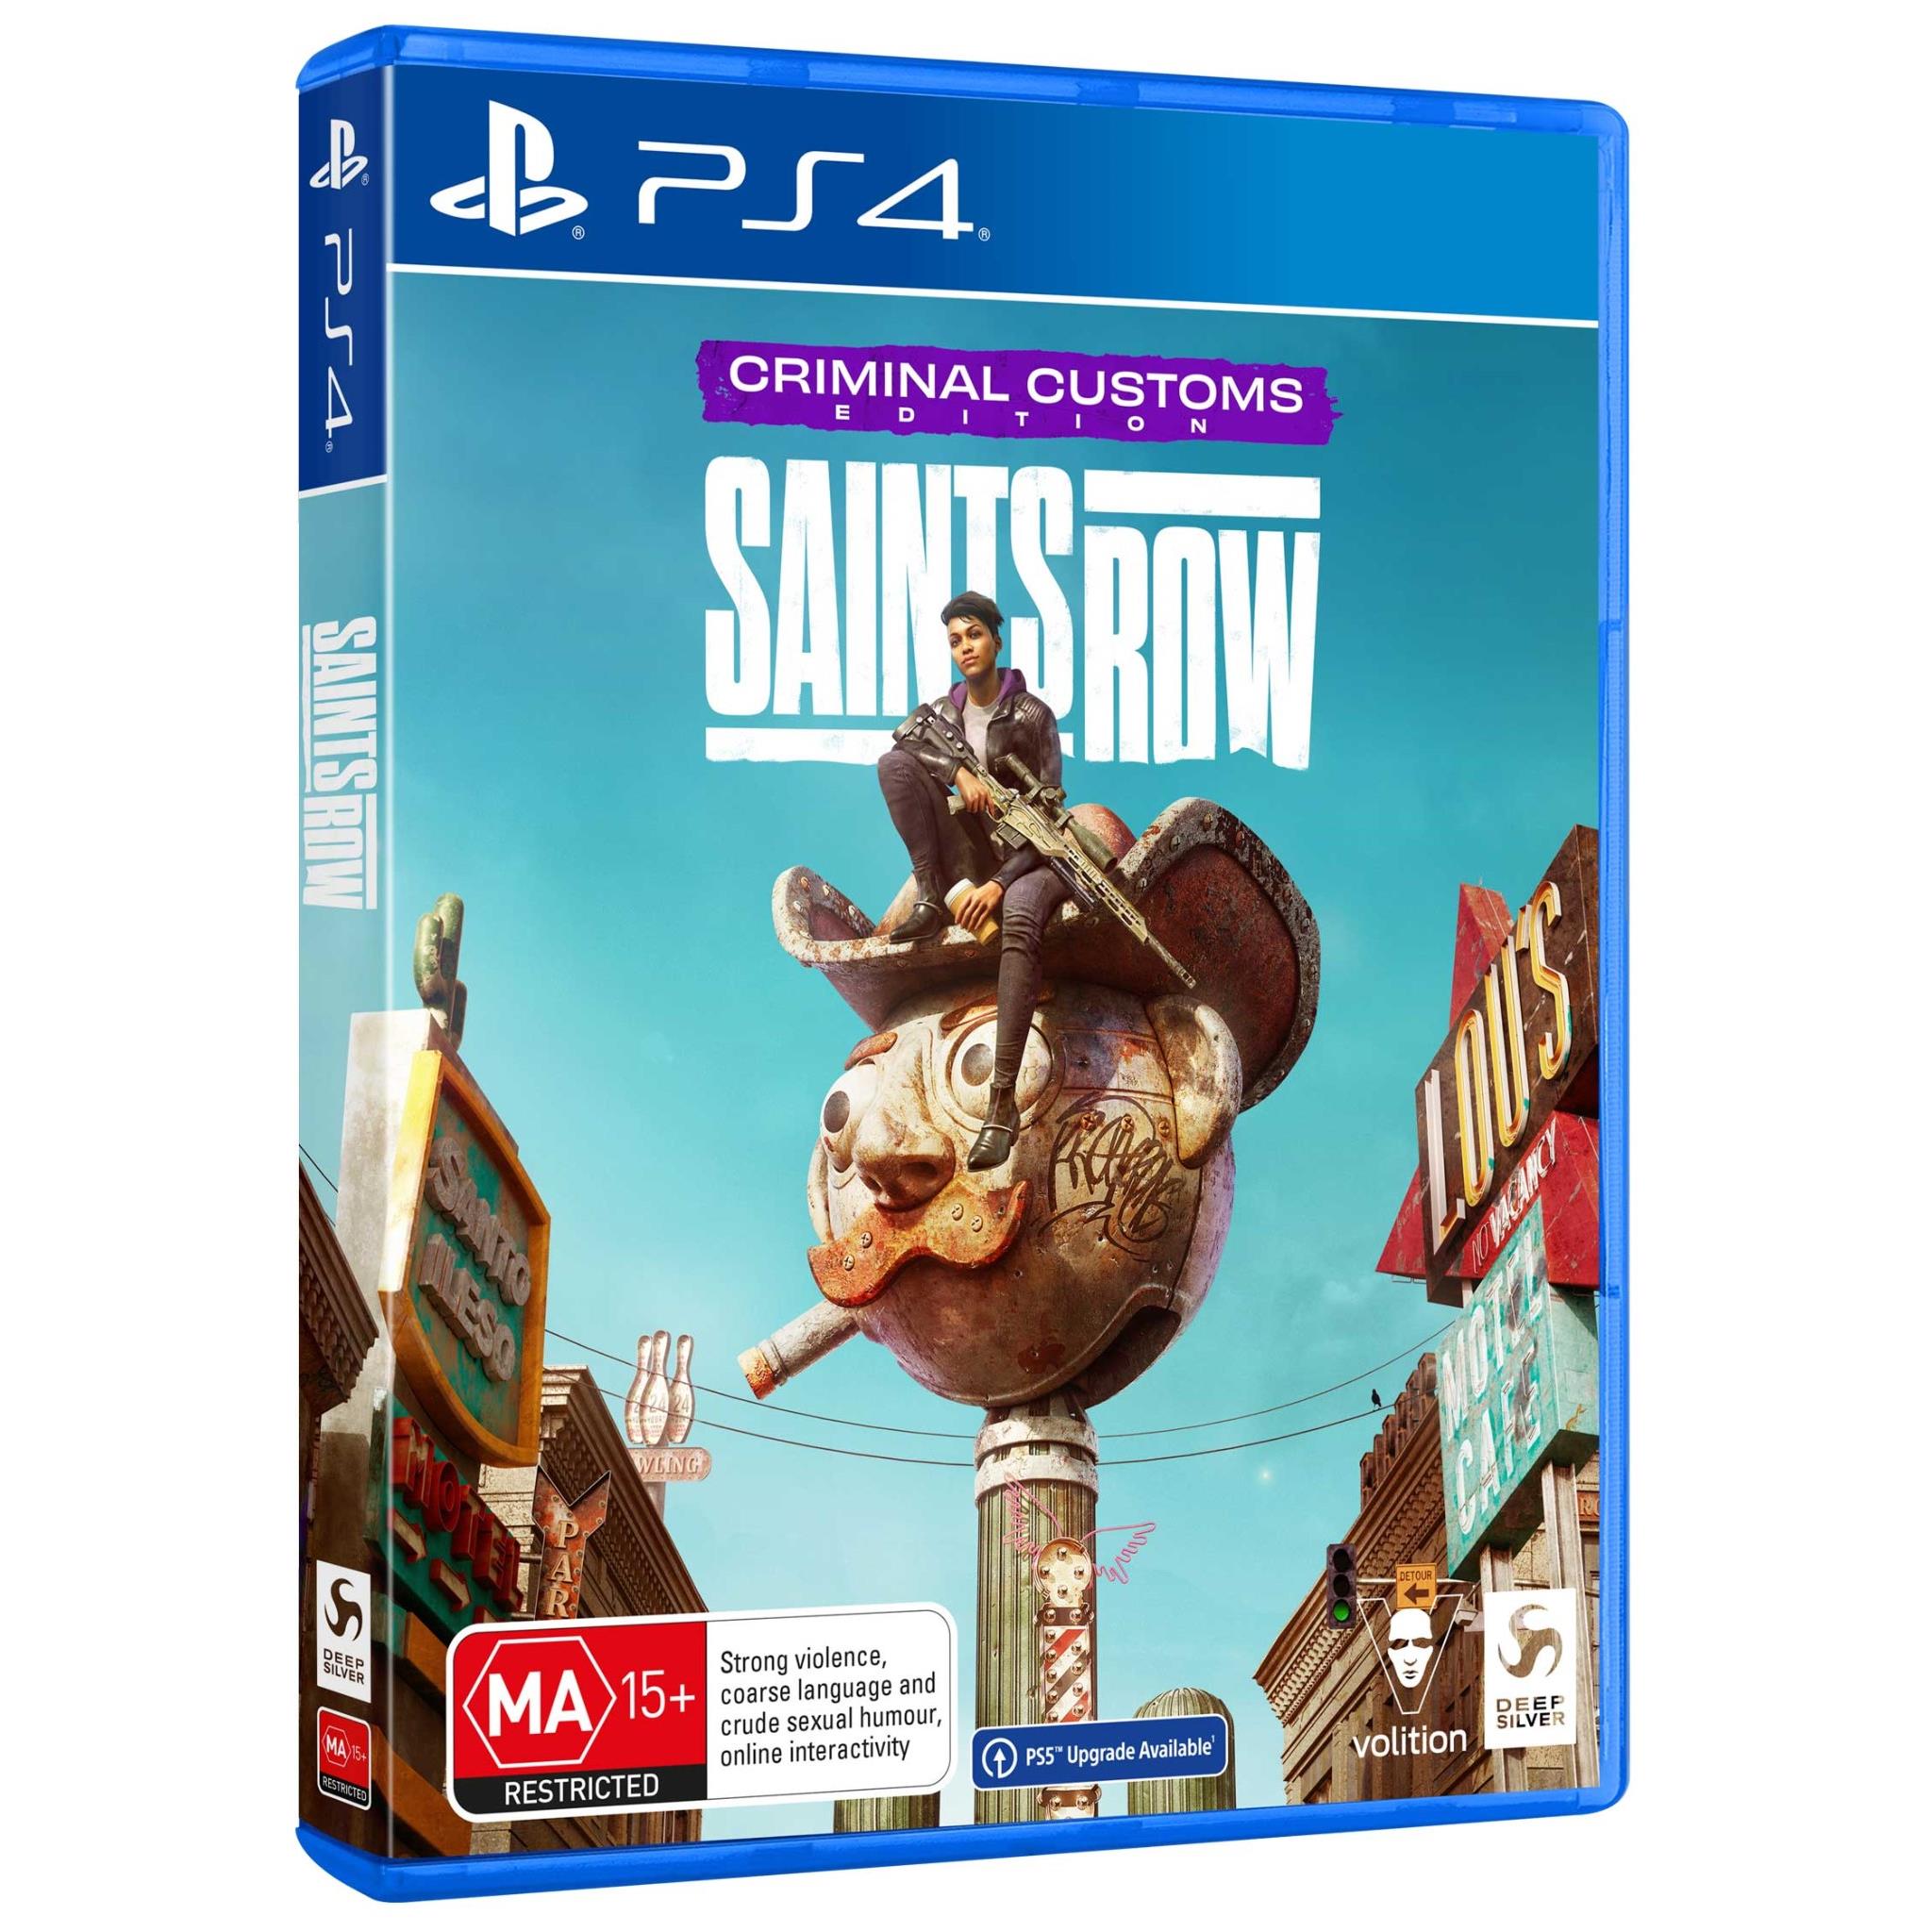 Buy Saints Row 2: Corporate Warfare - Microsoft Store en-SA